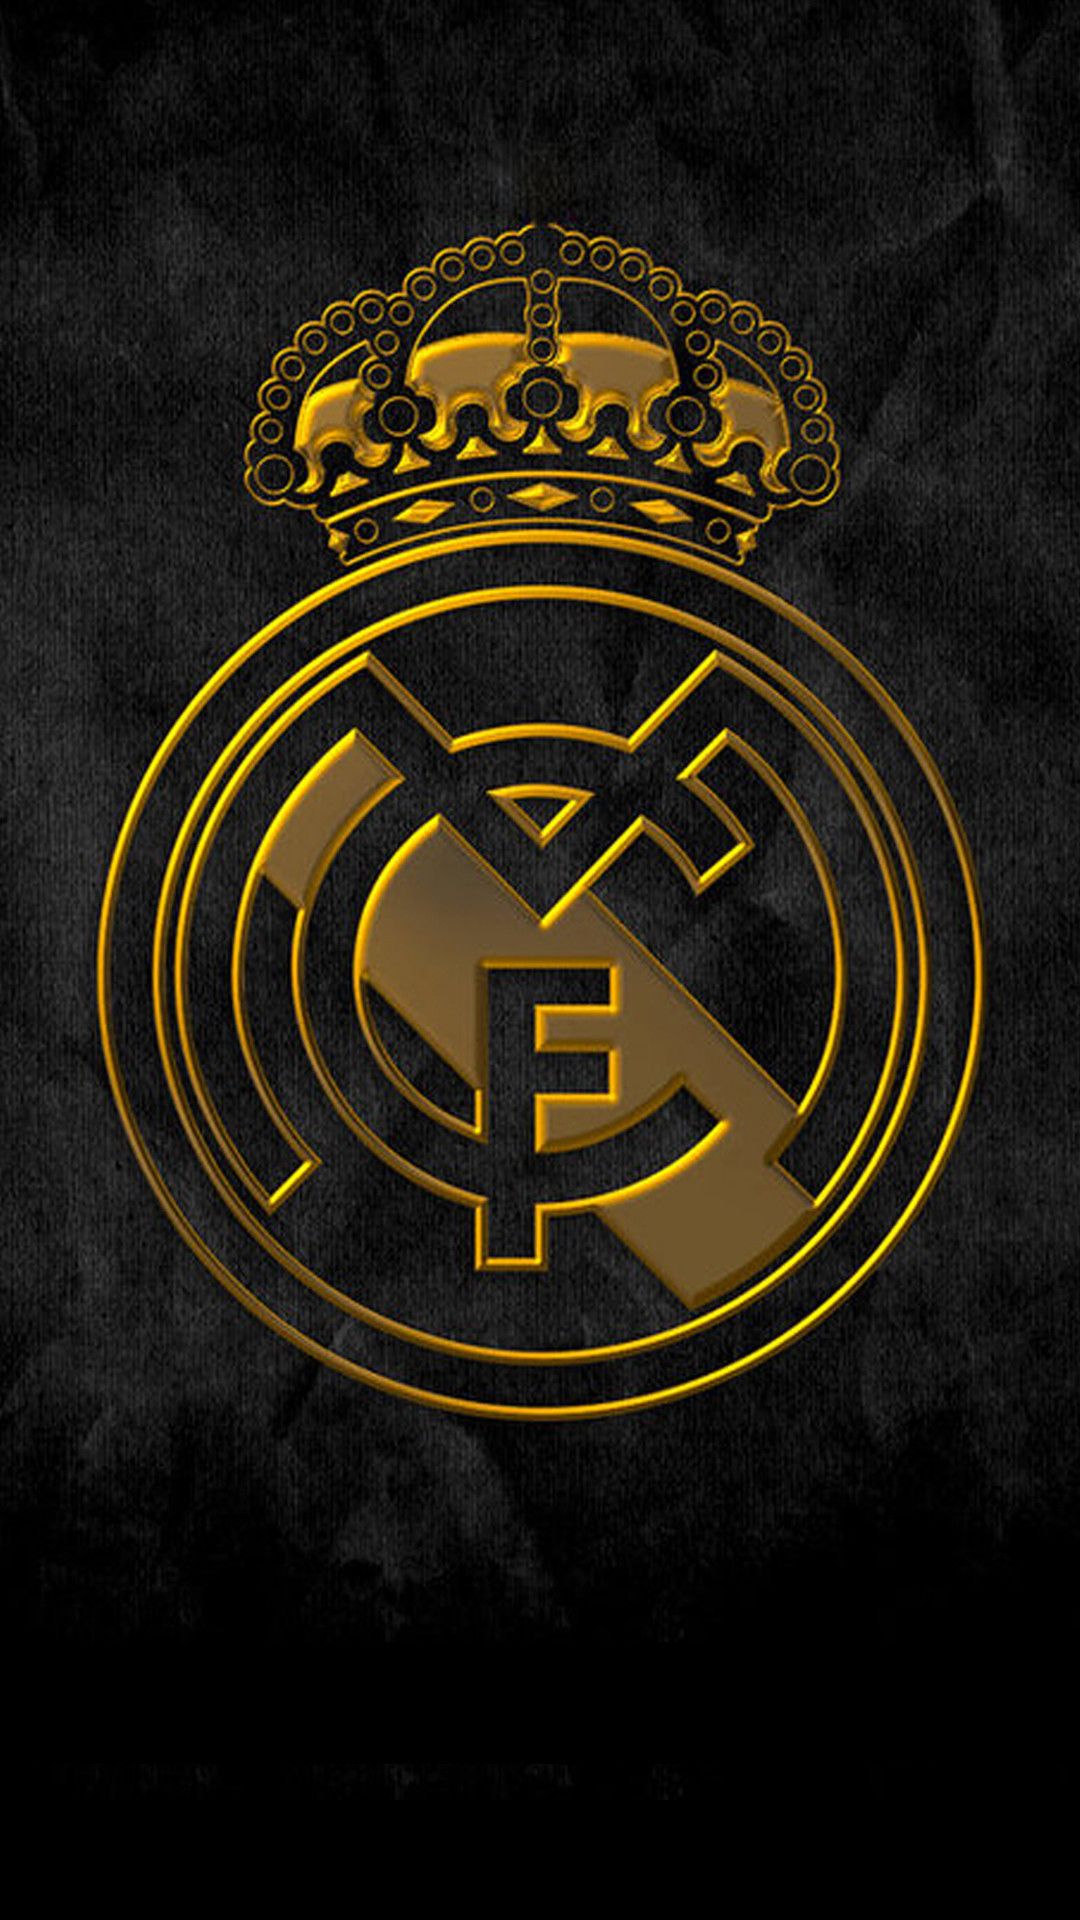 Fondos de pantalla del Real Madrid - FondosMil